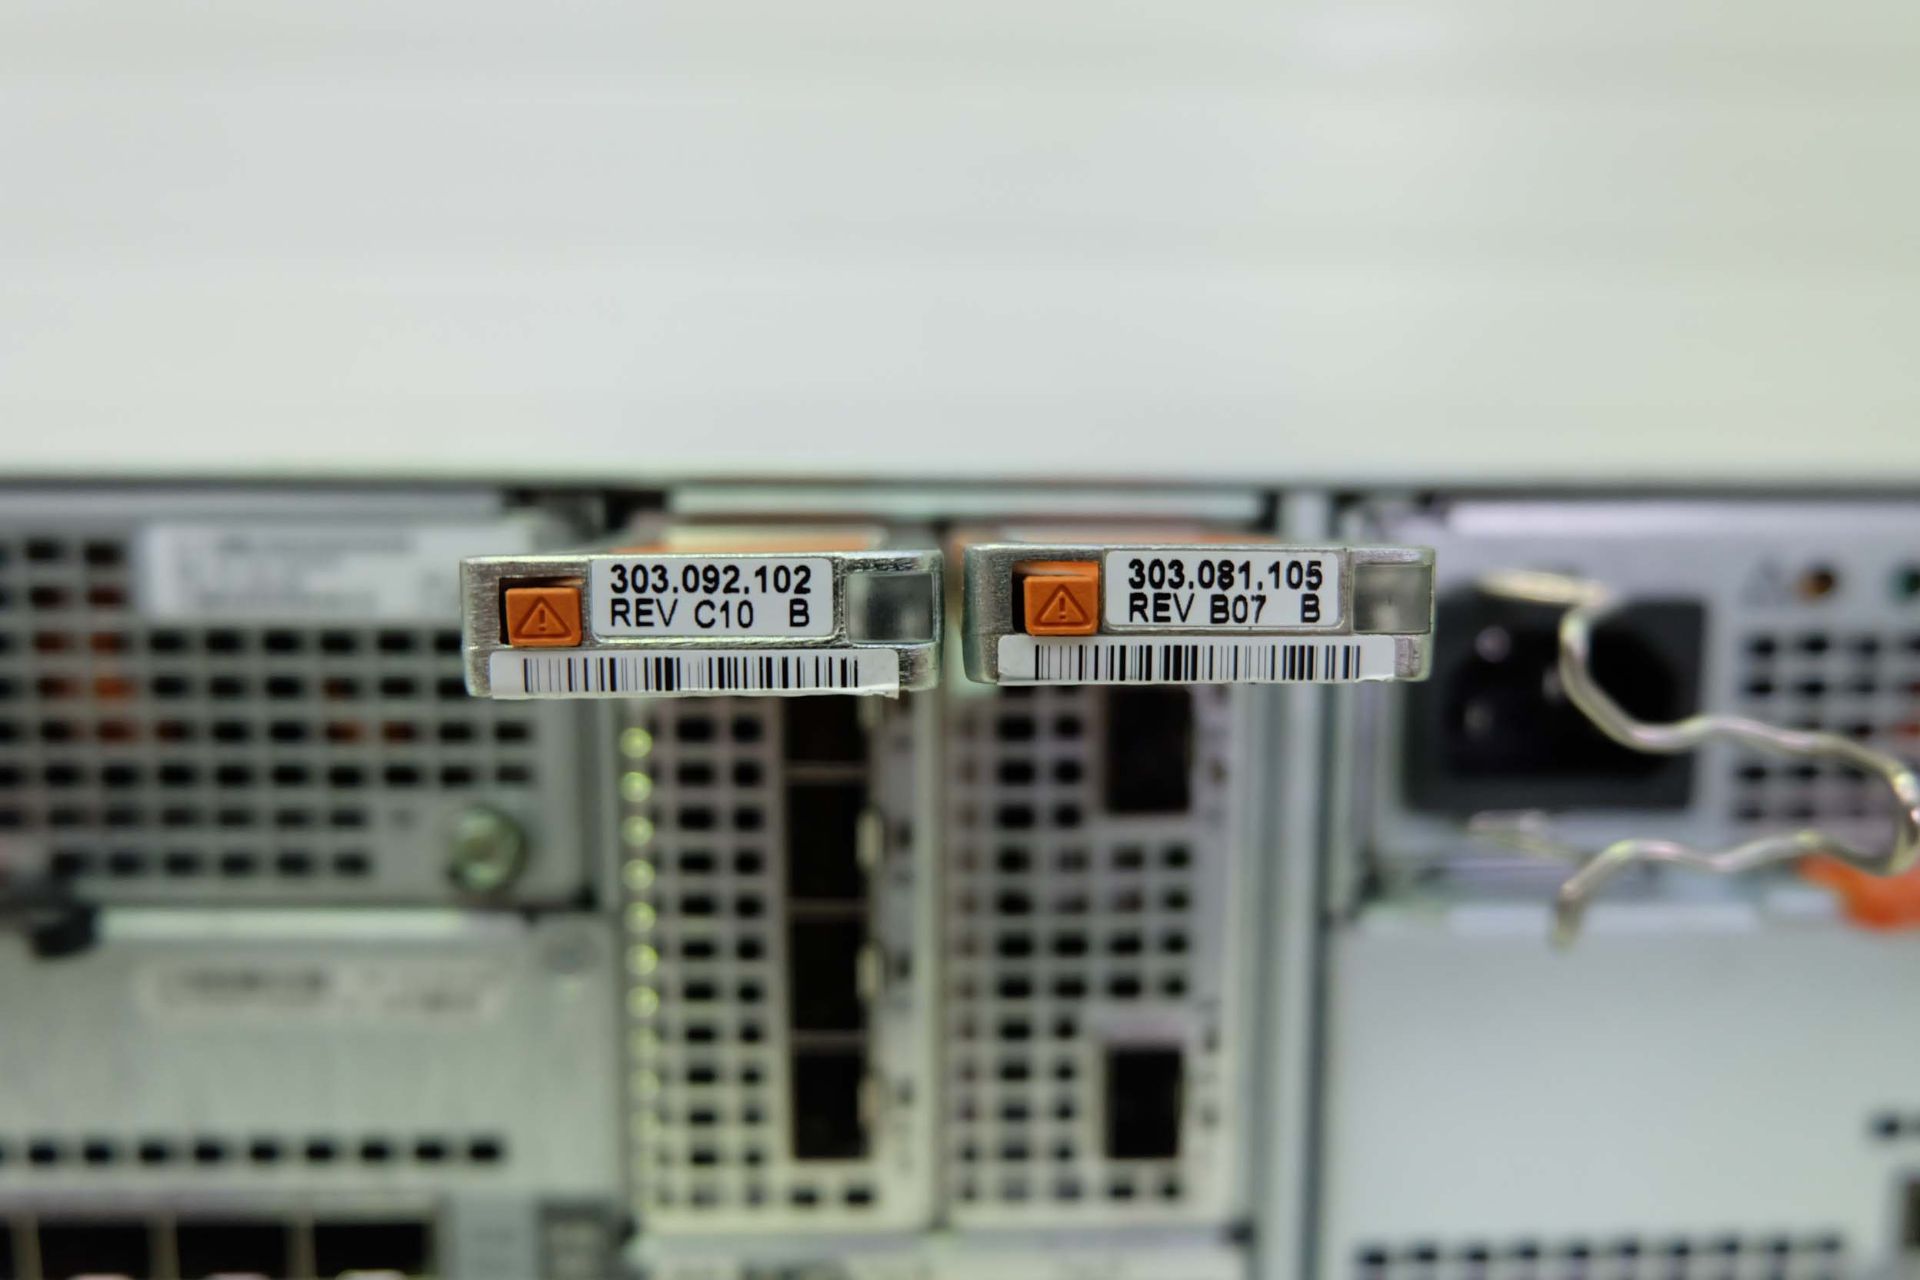 EMC2 Corp Model STPE 15 VNX 5500 SAN Rack Mountable 15 Bay Disk Array/Enclosure. (No HDD's). - Image 6 of 12